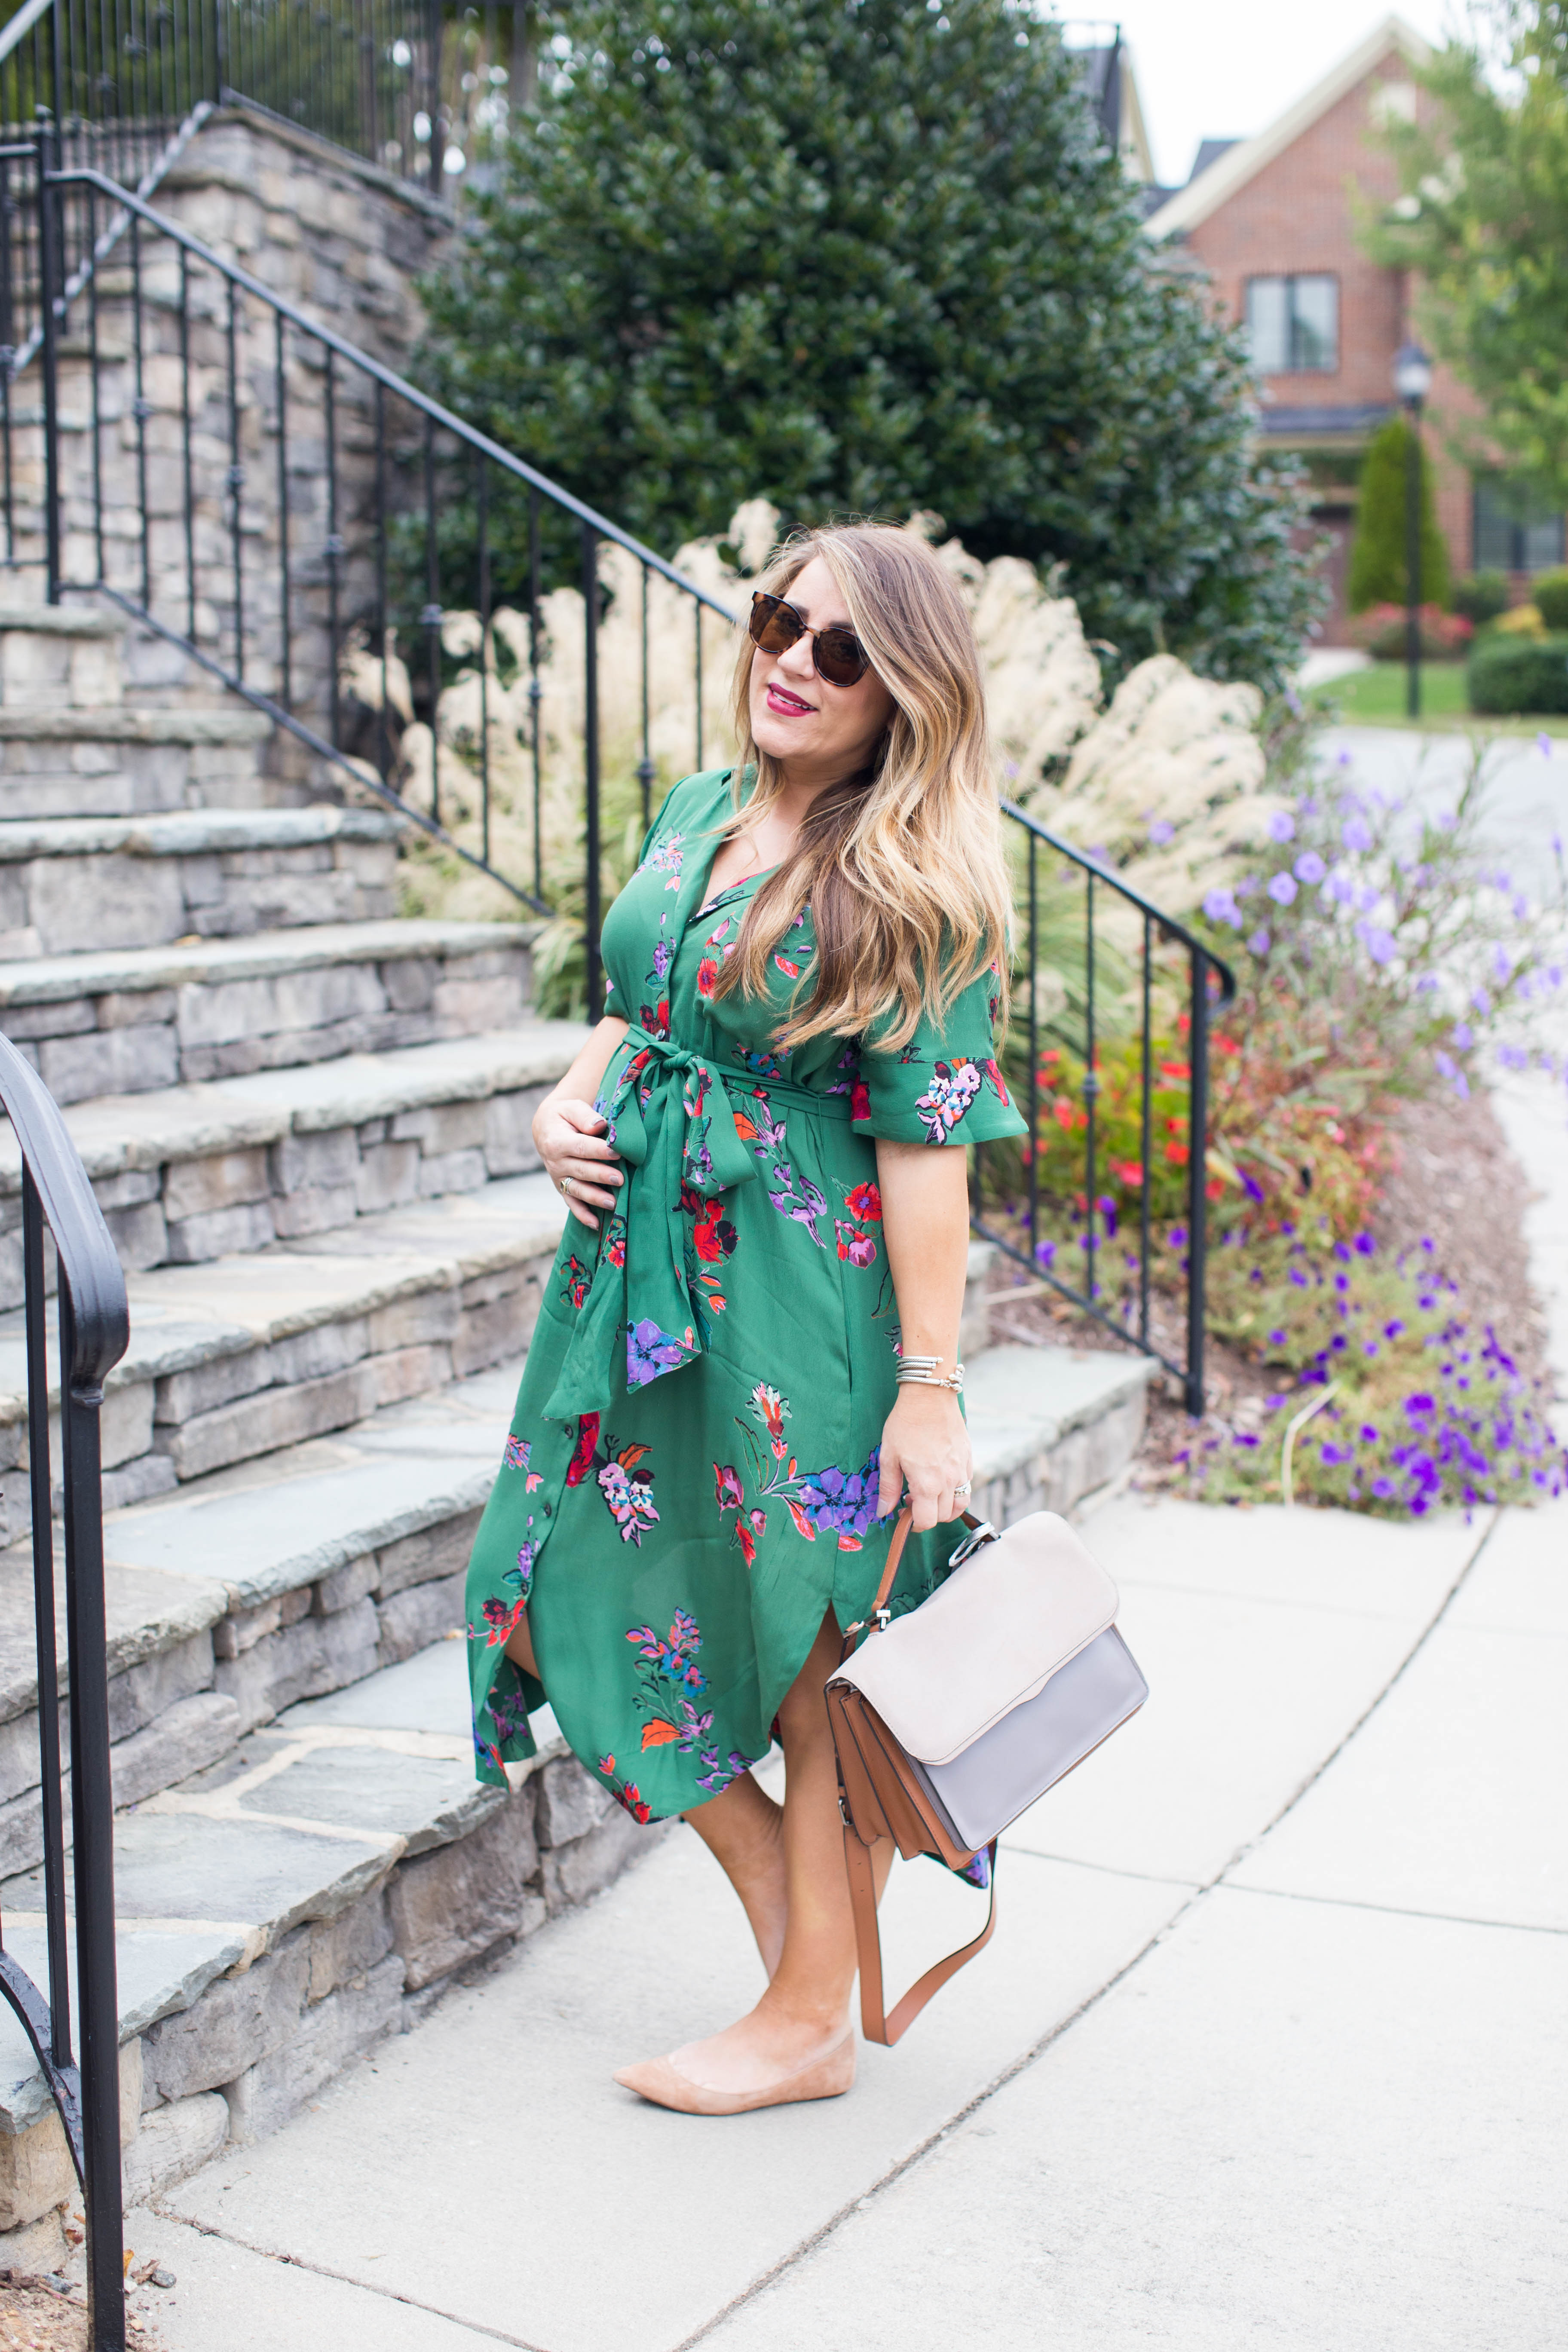 Fall Shirtdress - Fall Floral Shirt Dress by North Carolina fashion blogger Coffee Beans and Bobby Pins